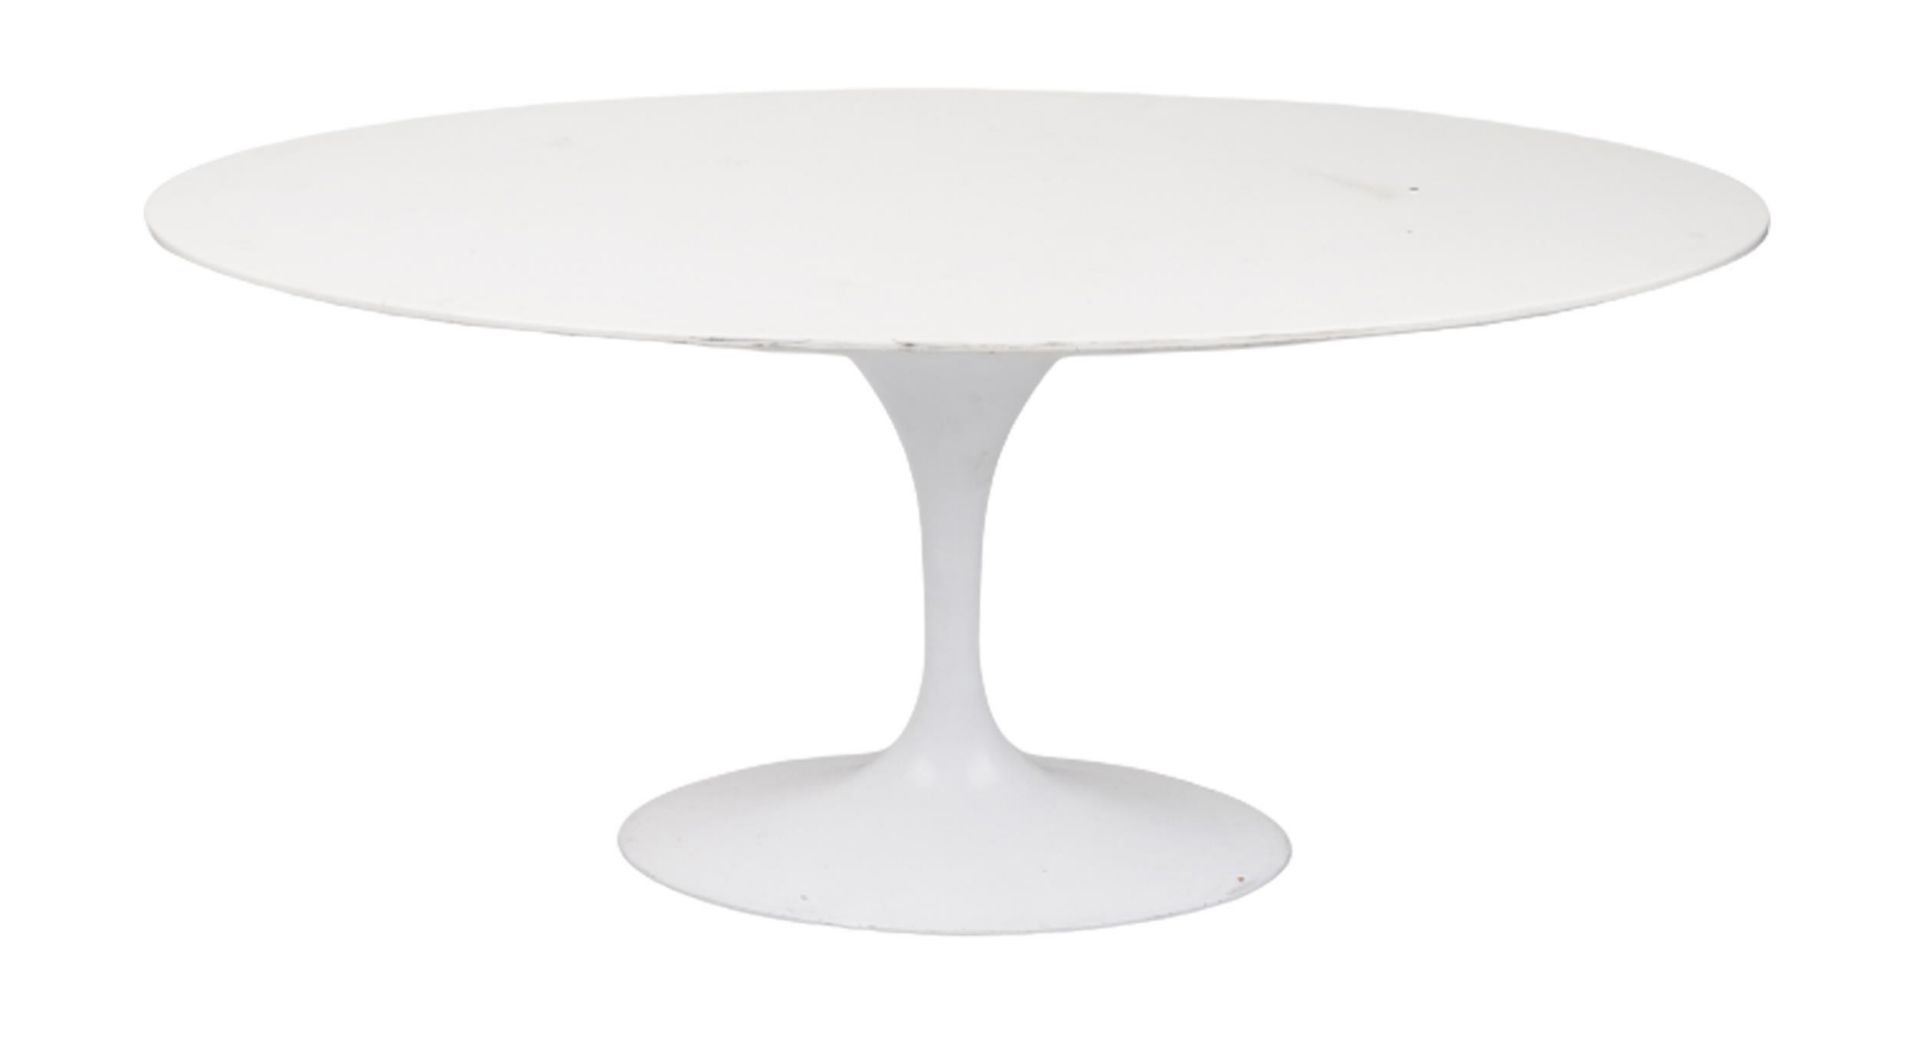 Eero Saarinen design contemporary tulip dining table, 75cm H x 170cm W x 110cm D : For further